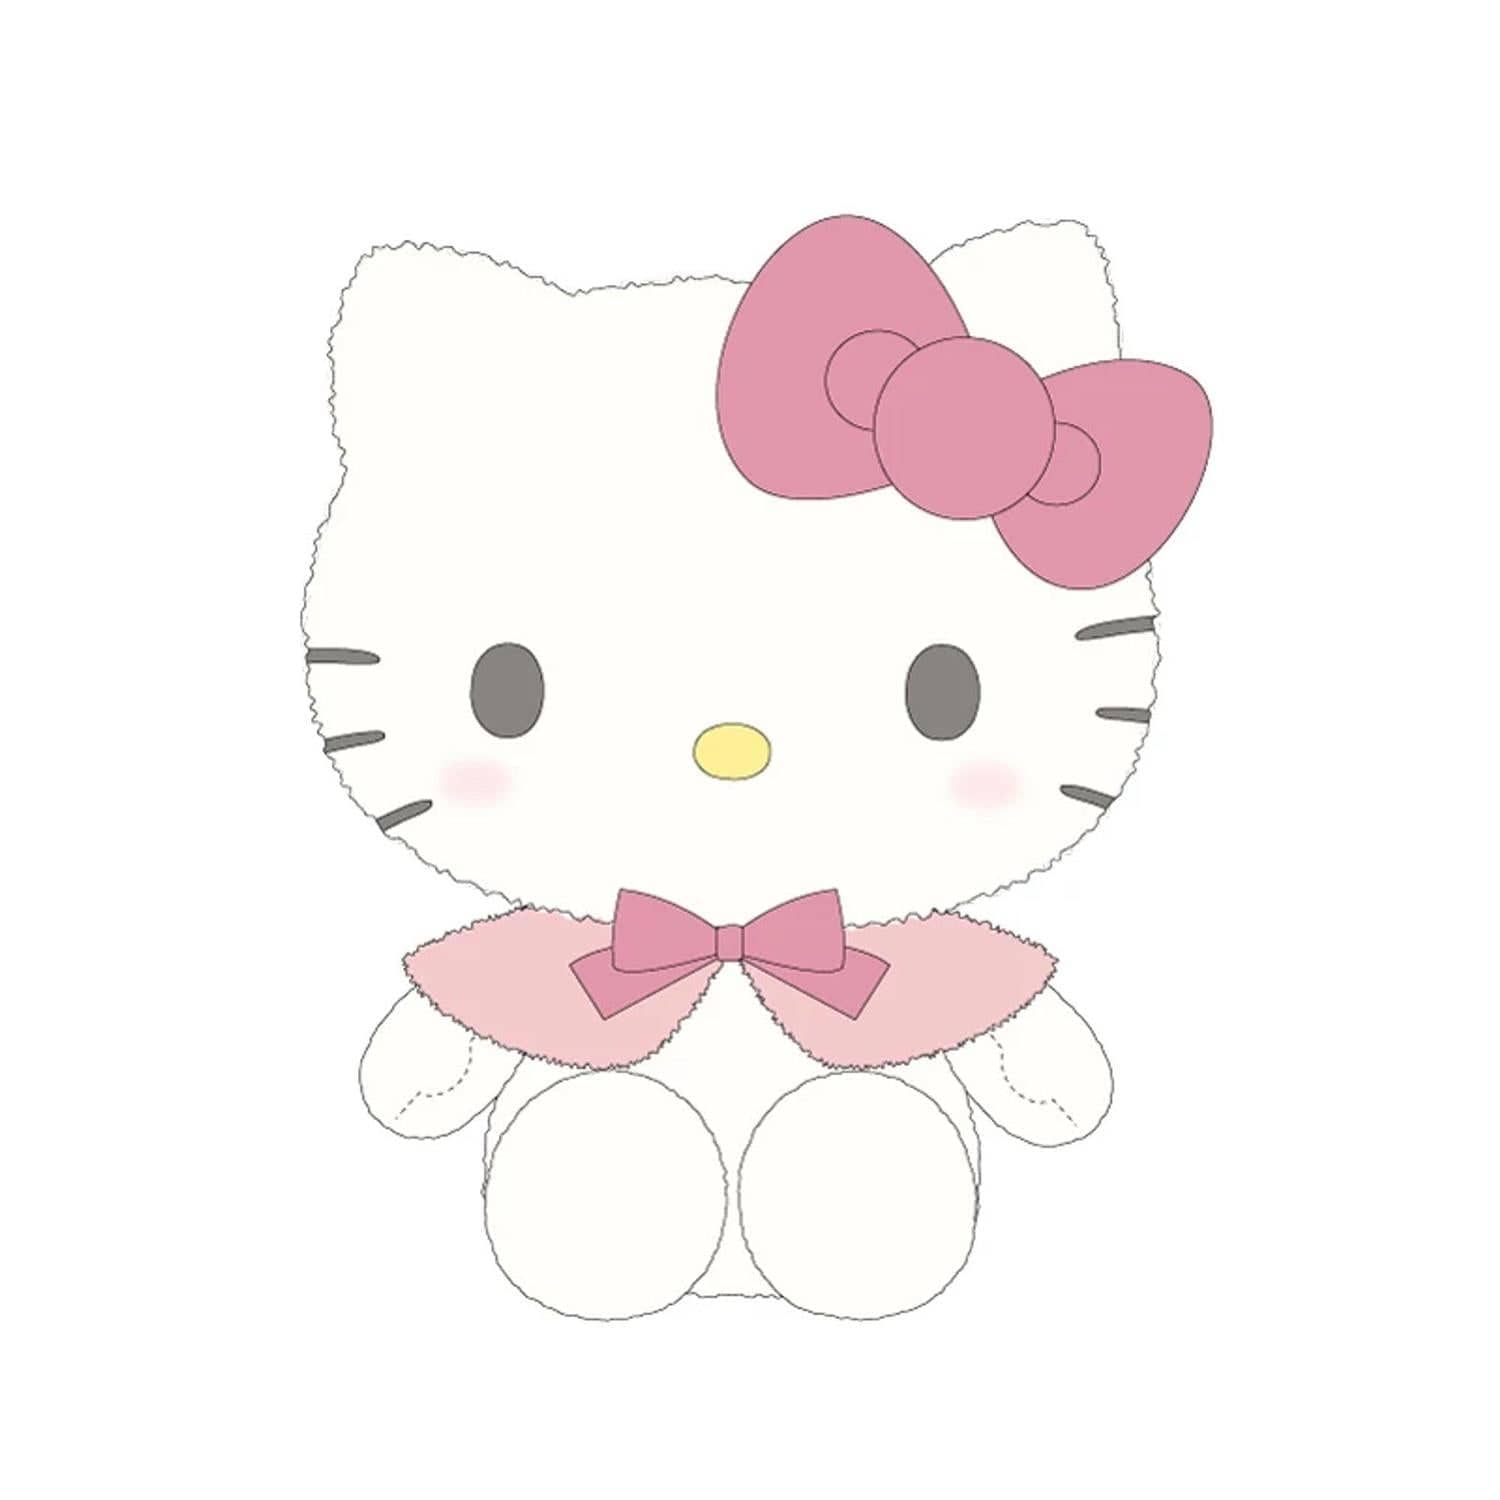 Hello Kitty Hugging Plush